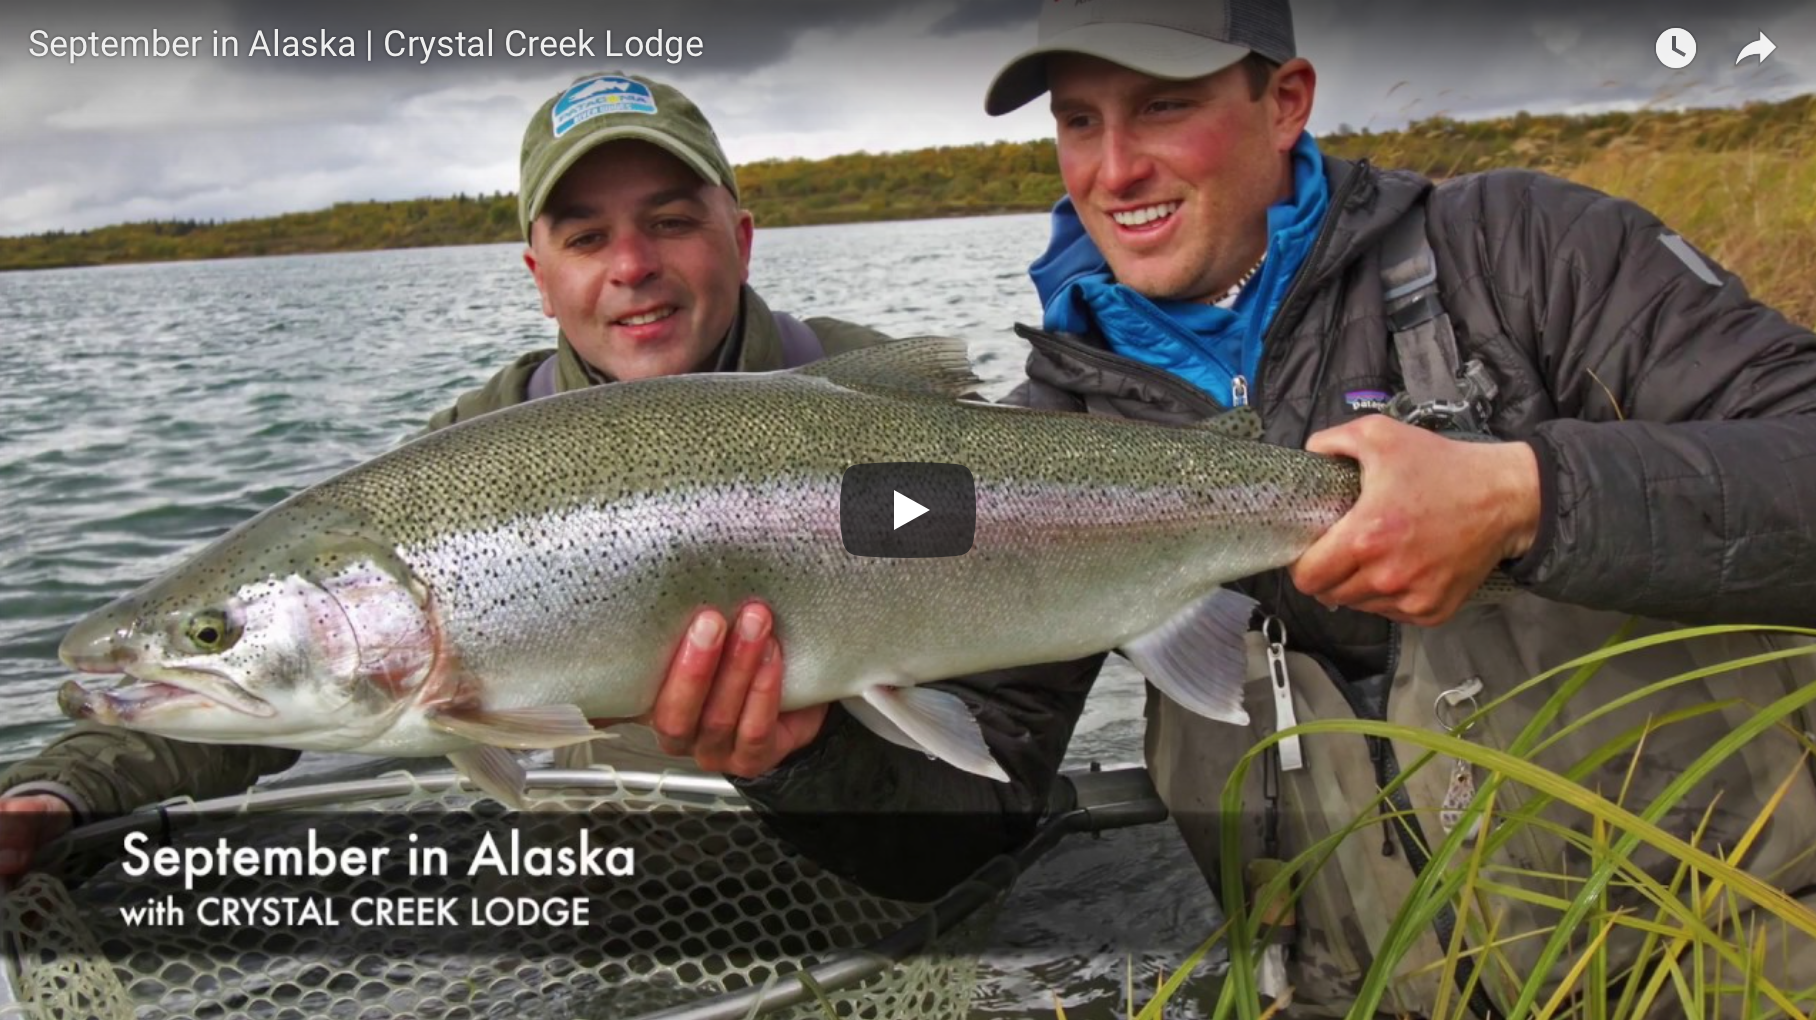 September in Alaska with Crystal Creek Lodge